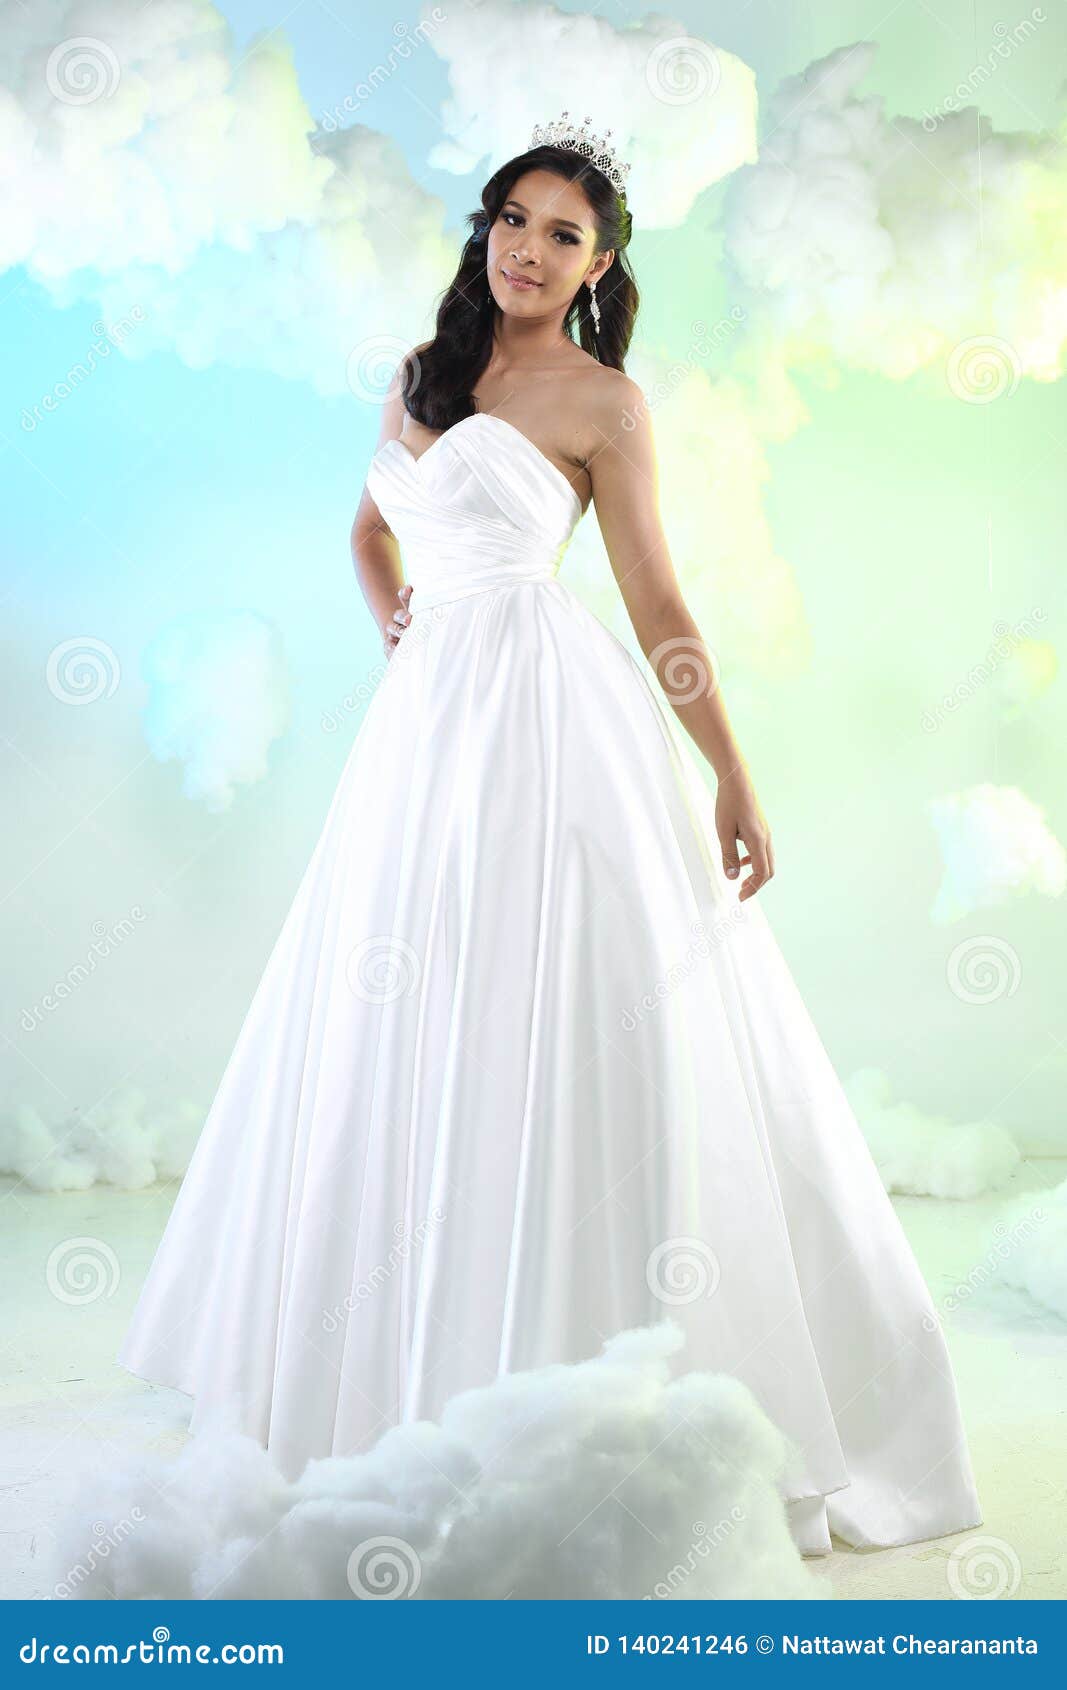 https://thumbs.dreamstime.com/z/lovely-asian-beautiful-woman-bride-white-wedding-lovely-caucasian-beautiful-woman-bride-white-wedding-gown-dress-lace-veil-140241246.jpg